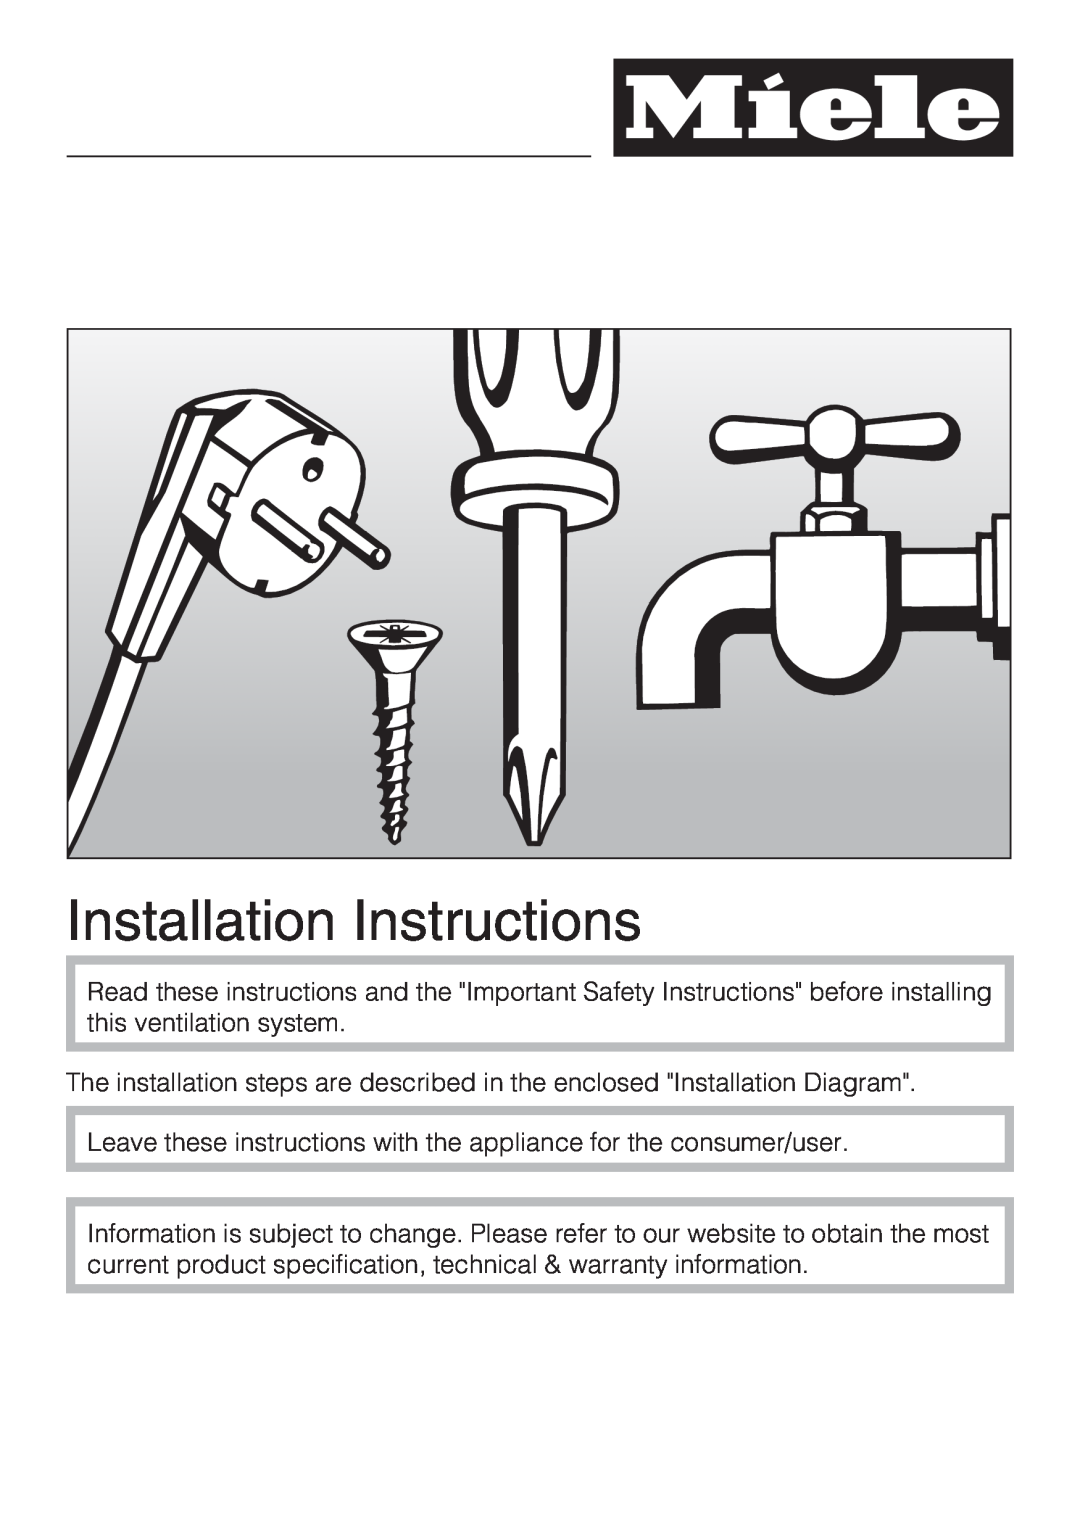 Miele DA 3490, DA 3460, DA 3480 installation instructions Installation Instructions 